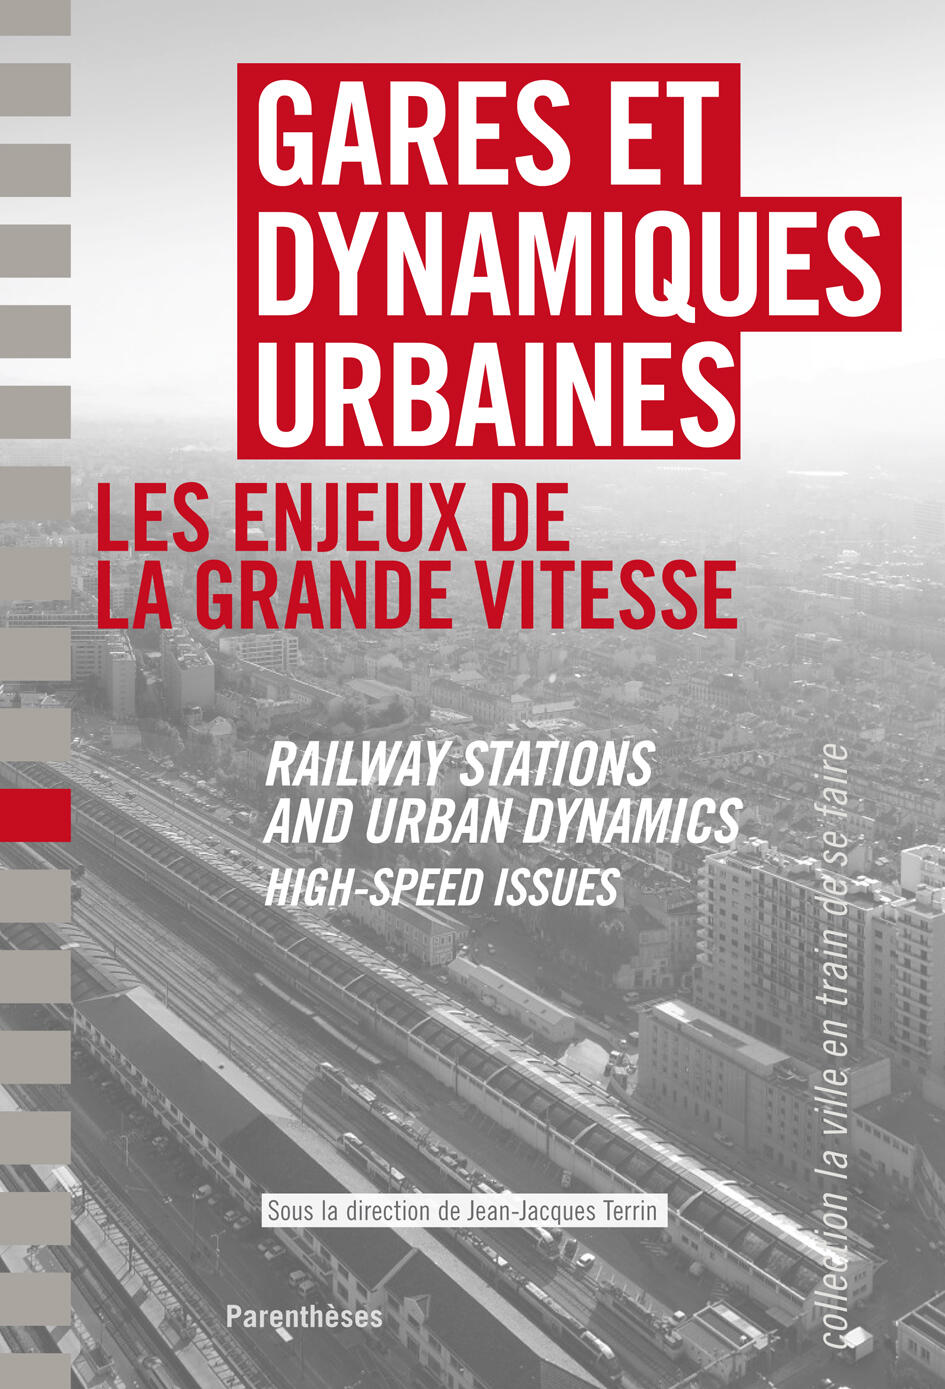 Railway stations and urban dynamics 